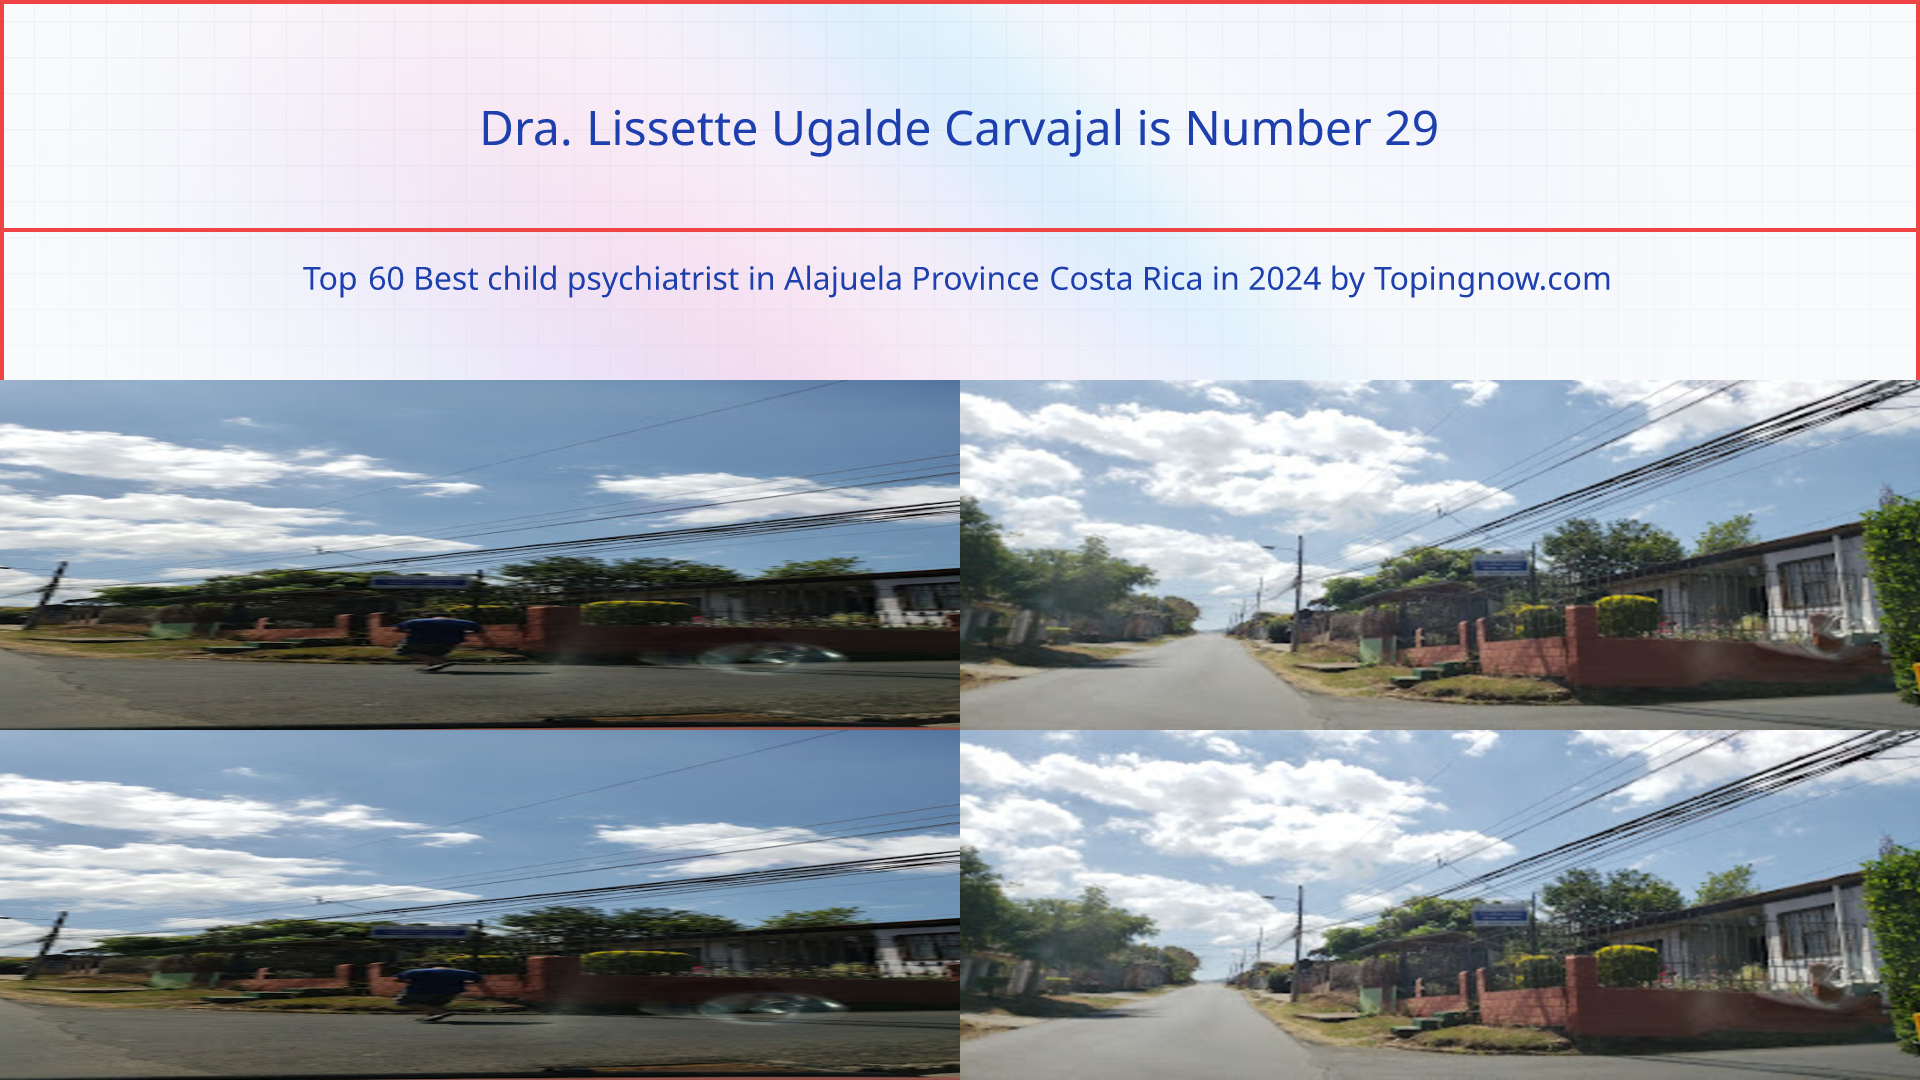 Dra. Lissette Ugalde Carvajal: Top 60 Best child psychiatrist in Alajuela Province Costa Rica in 2024